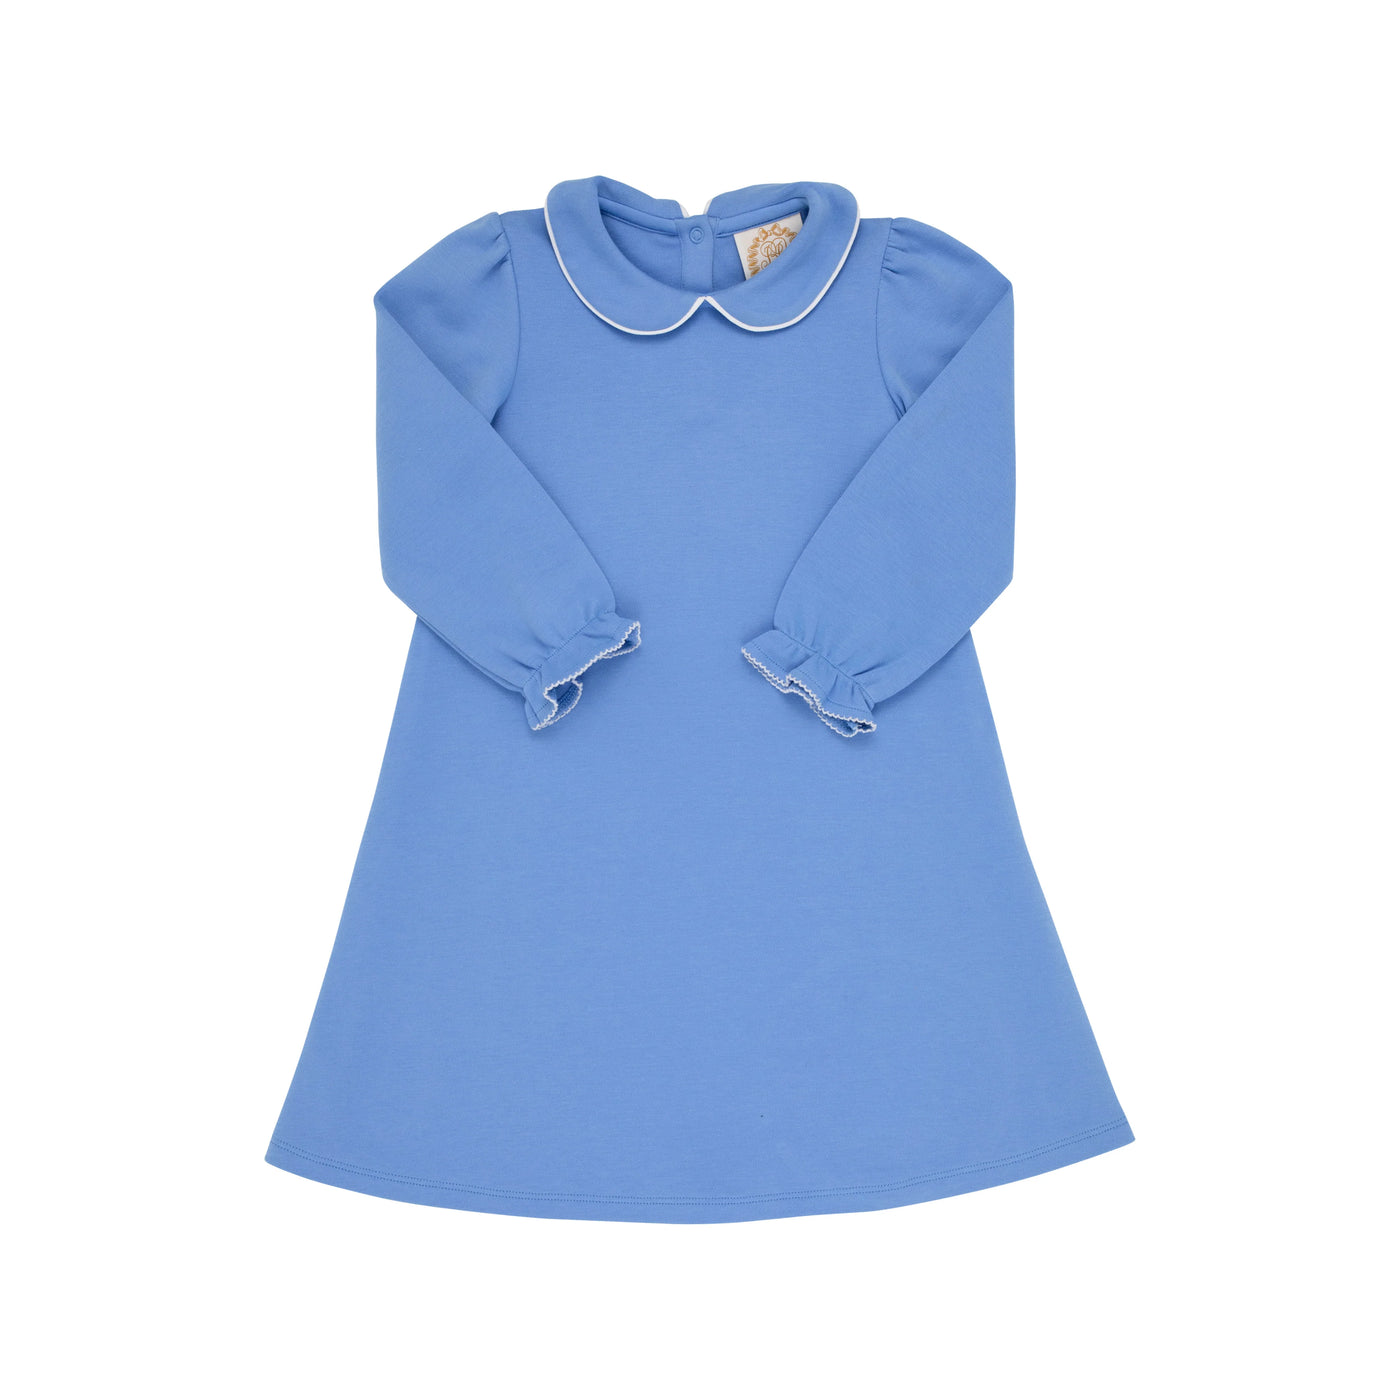 Sadie Sweatshirt Dress-Barbados Blue w/Worth Avenue White